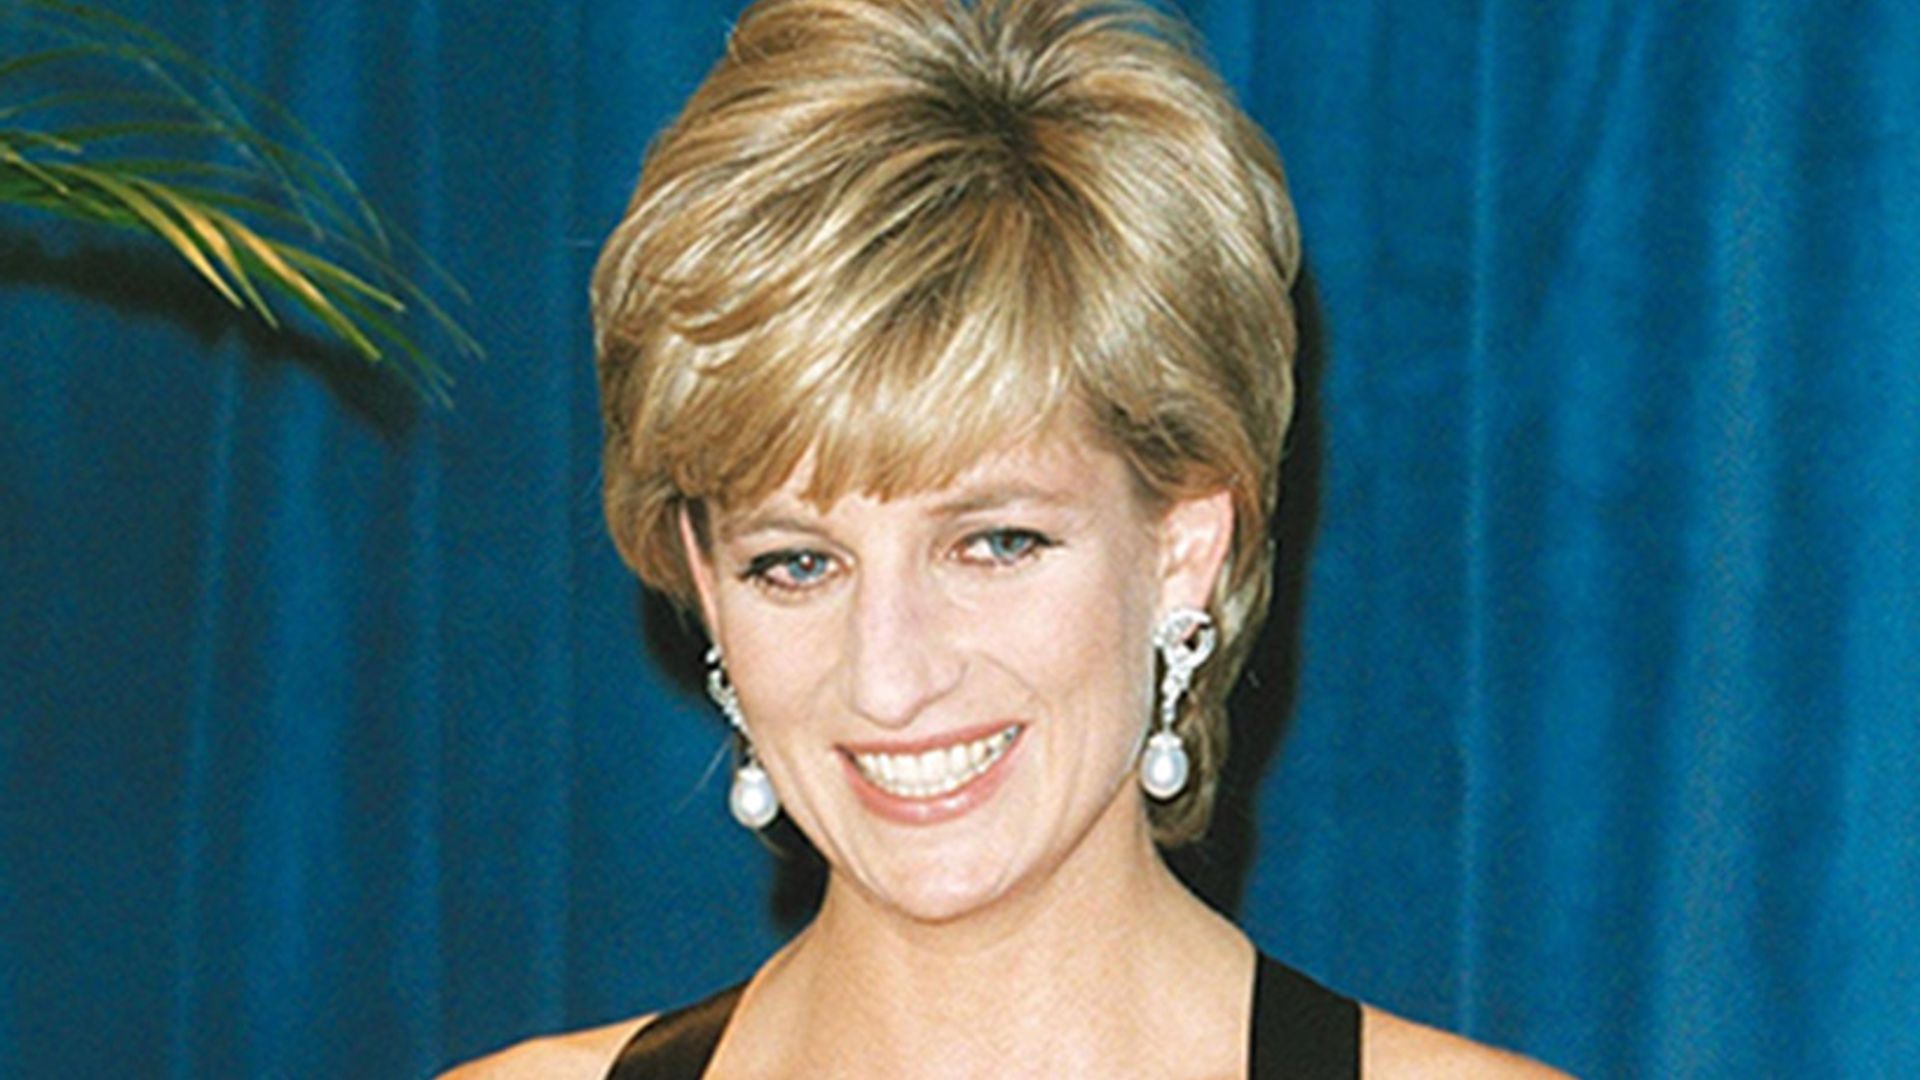 Princess Dianas Beauty Secrets Revealed By Her Make Up Artist Hello